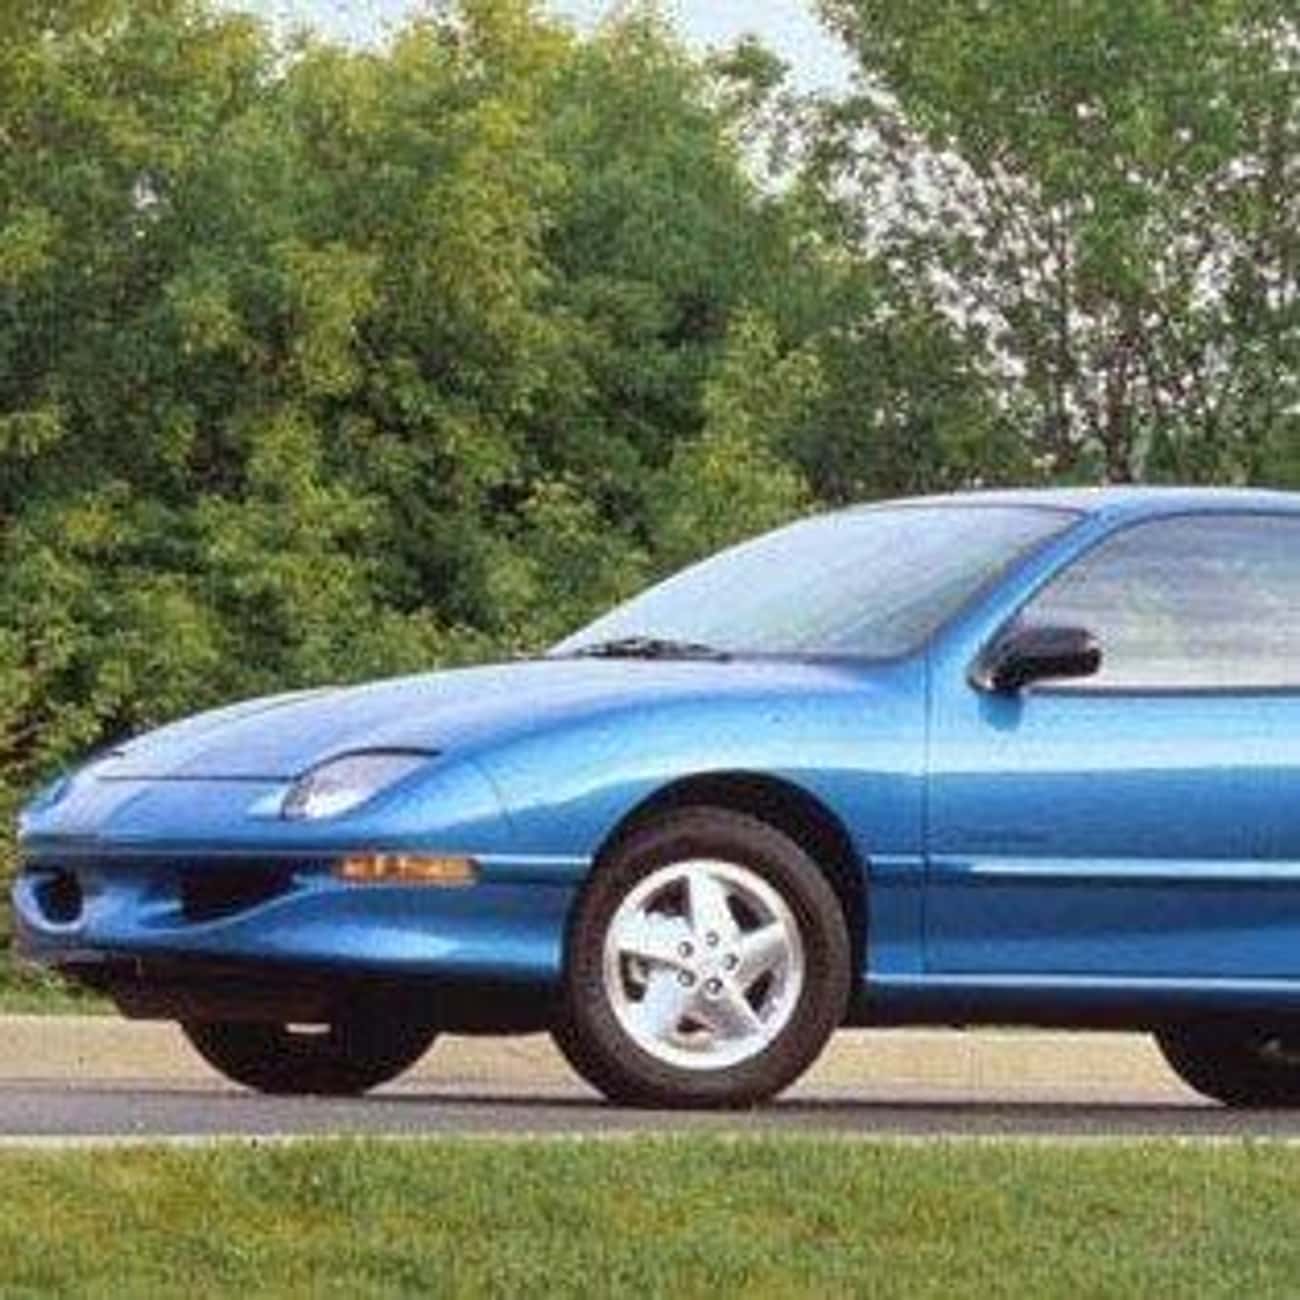 1997 Pontiac Sunfire Sedan